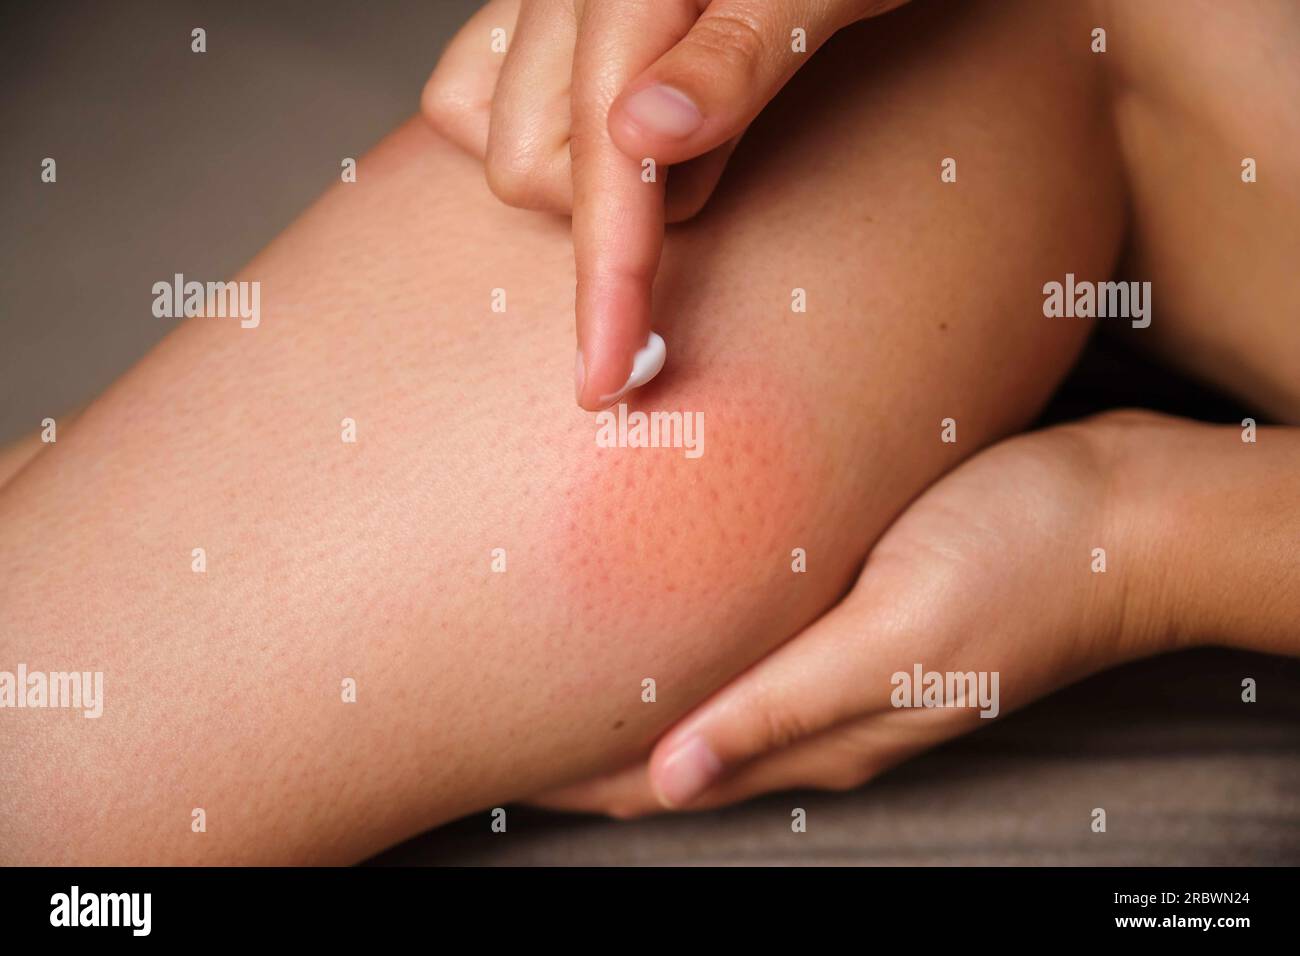 Woman applying medicine cream on mosquito bite on her leg. Stock Photo